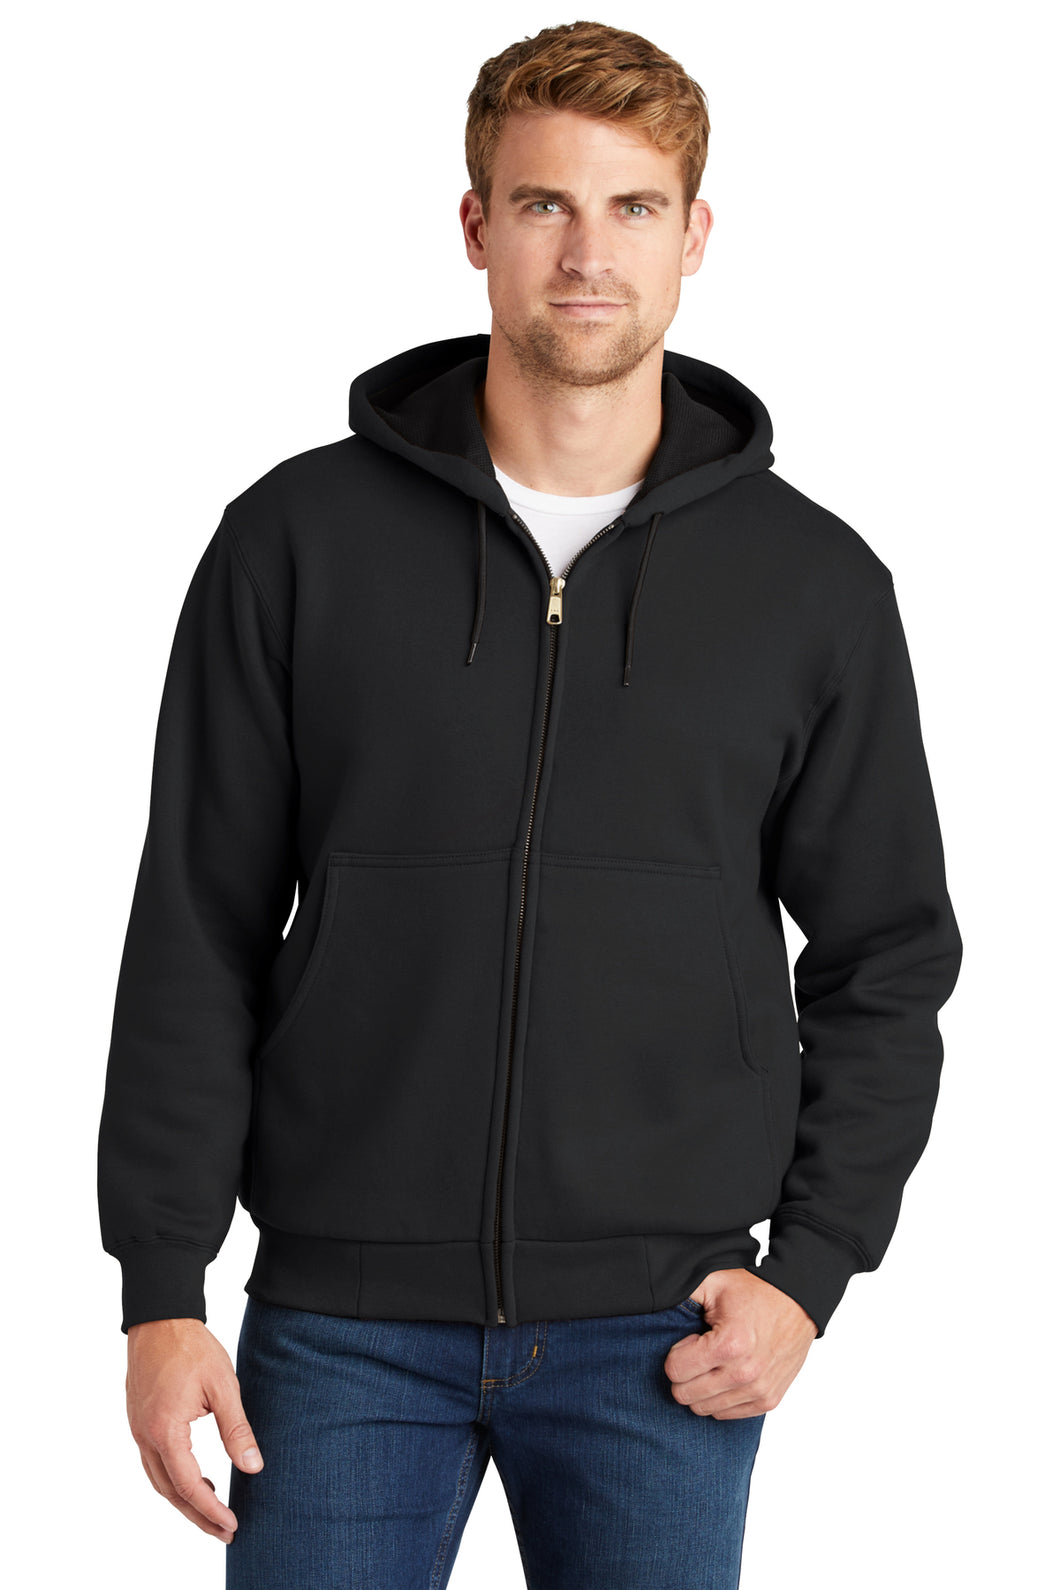 CornerStone® – Heavyweight Full-Zip Hooded Sweatshirt with Thermal Lining